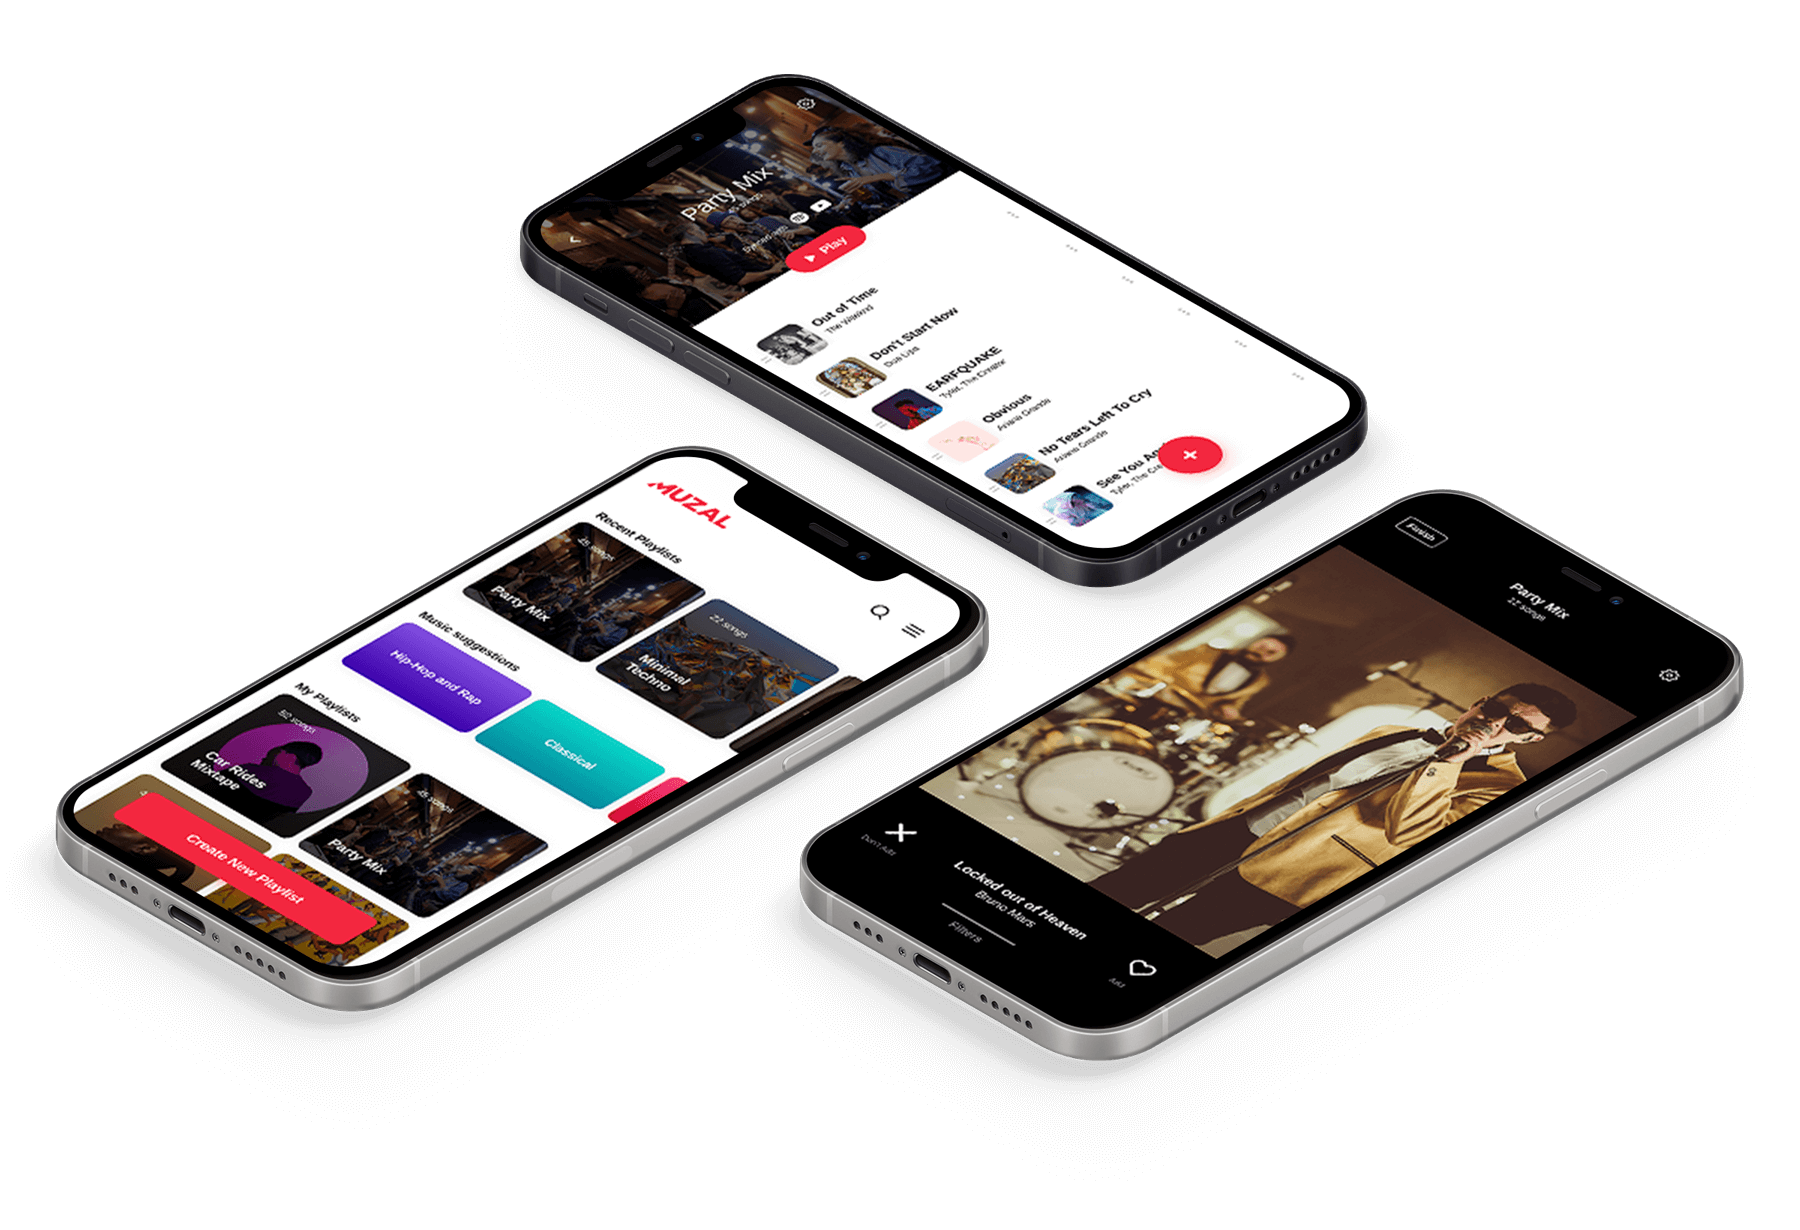 MUZAL - iOS & Android Mobile App